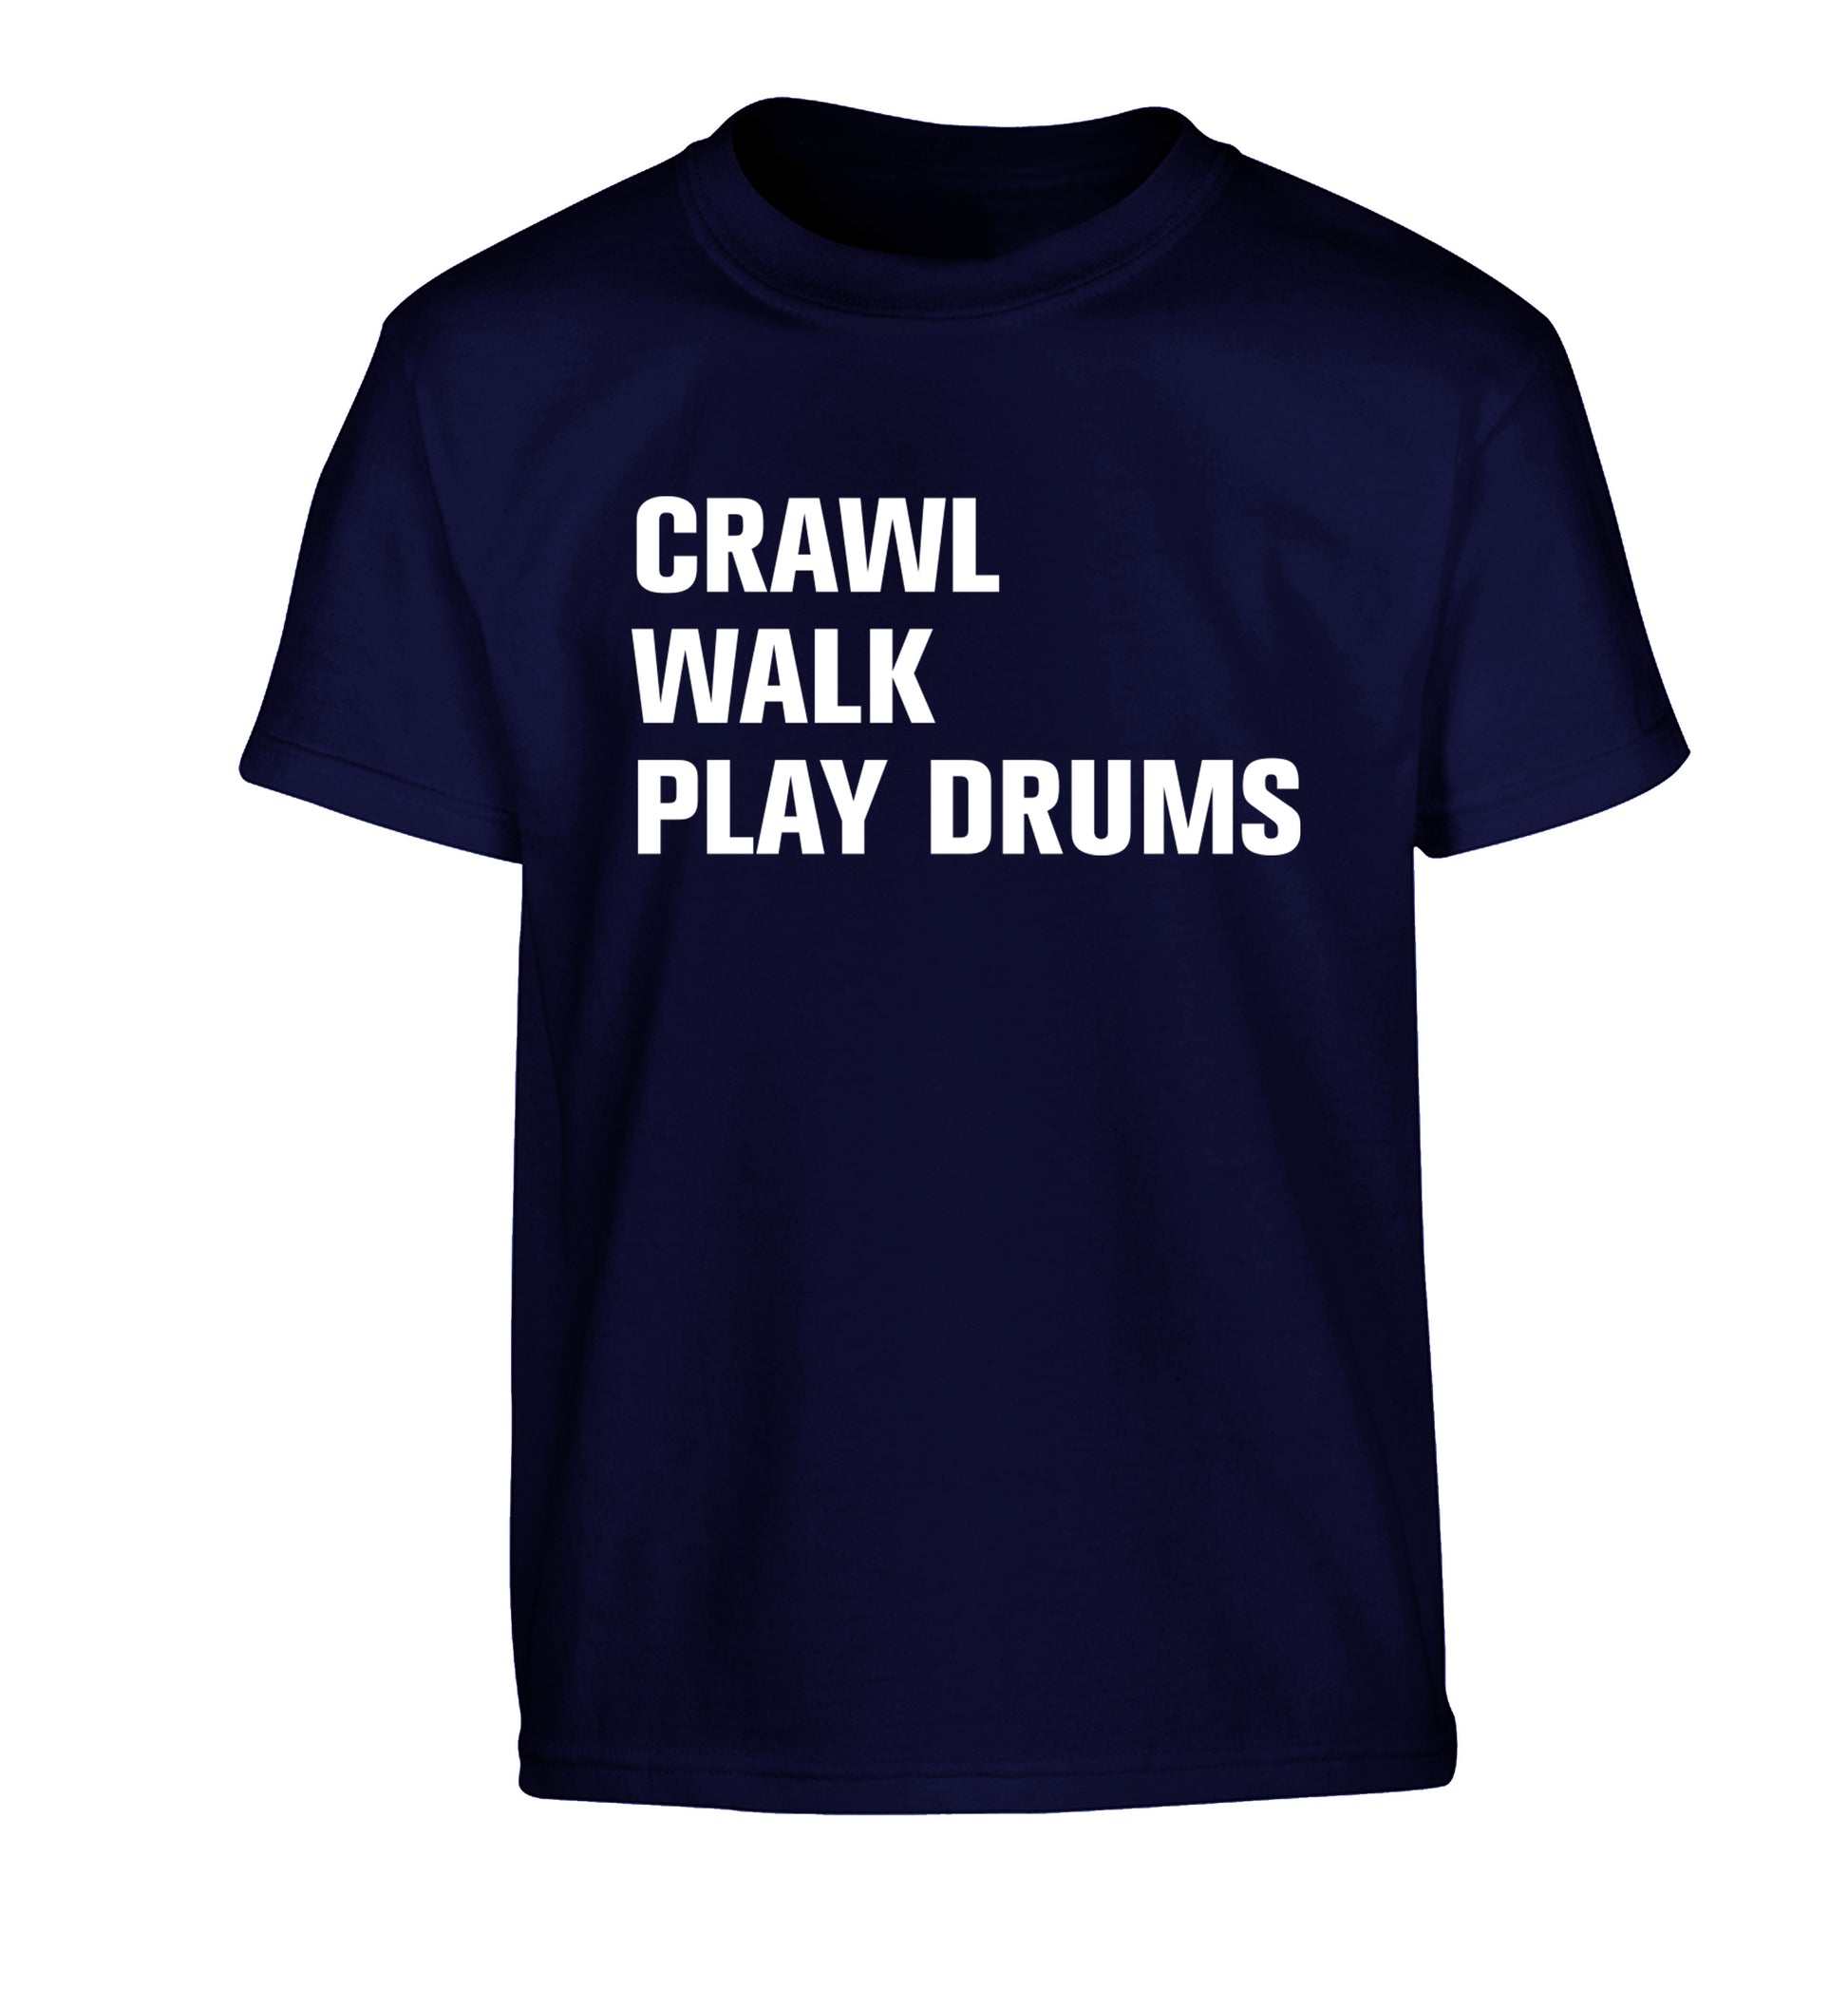 Crawl walk play drums Children's navy Tshirt 12-13 Years